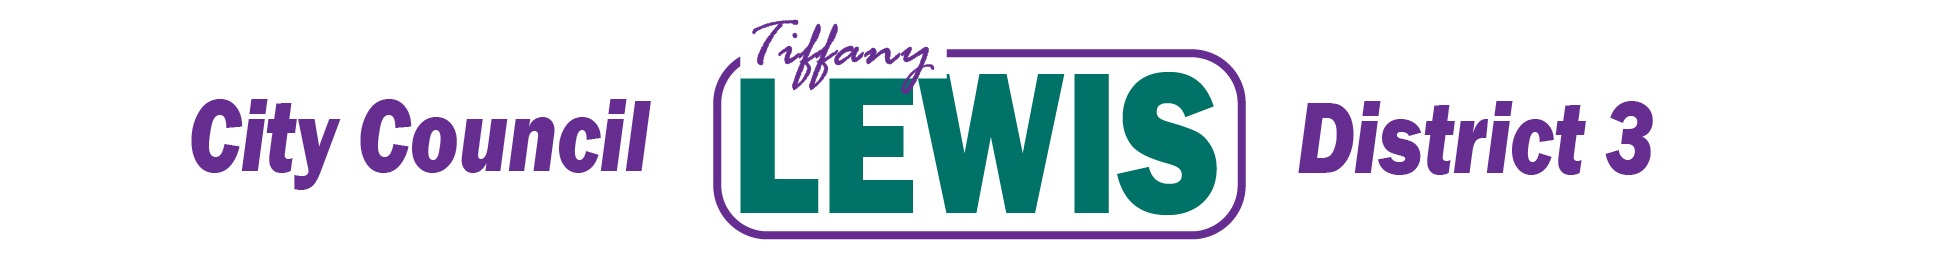 Lewis4Camarillo logo